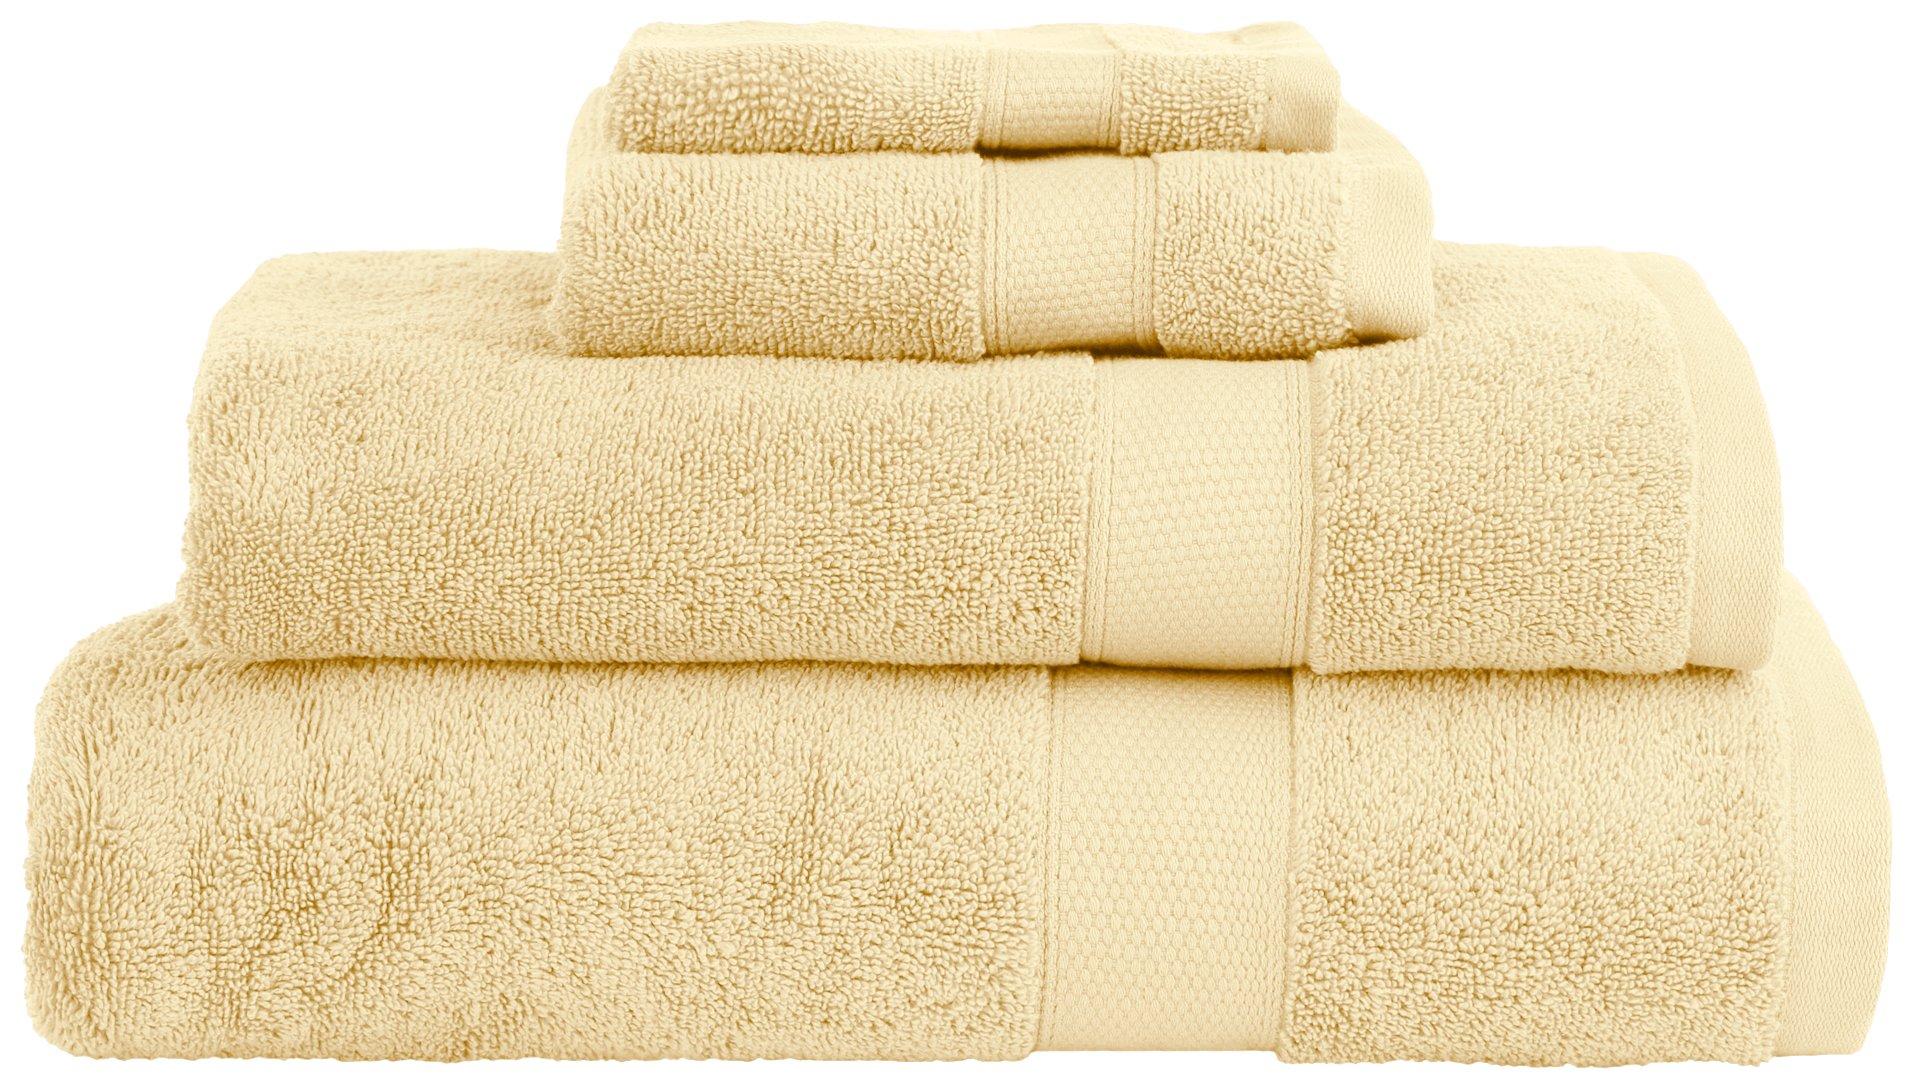 https://images.beallsflorida.com/i/beallsflorida/666-1532-6681-75-yyy/*Performance-Towel-Collection*?$BR_thumbnail$&fmt=auto&qlt=default